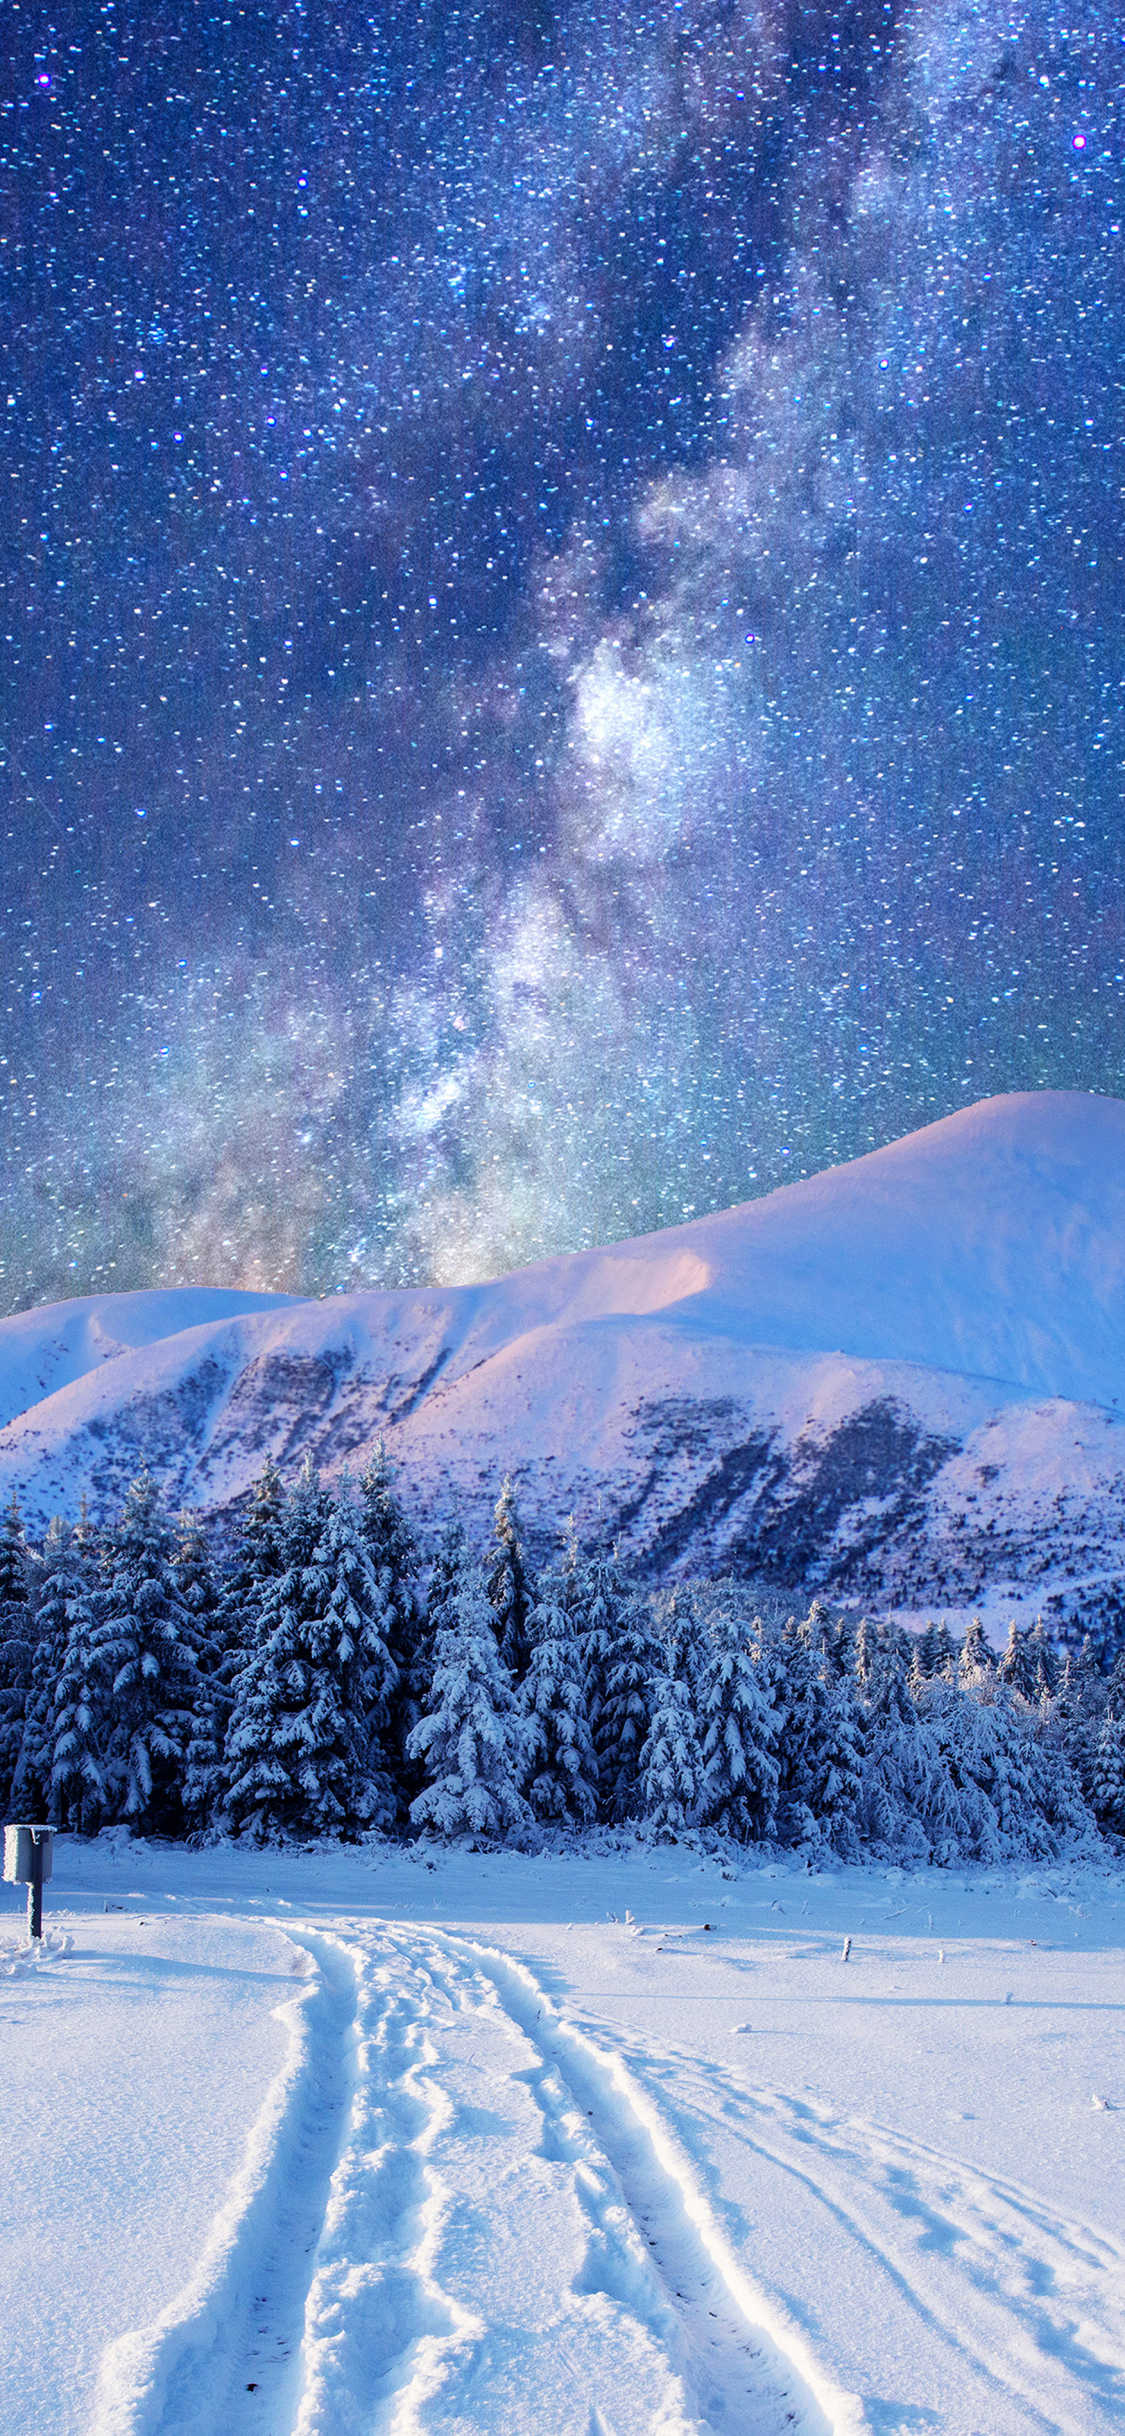 Starry Sky over Winter Landscape